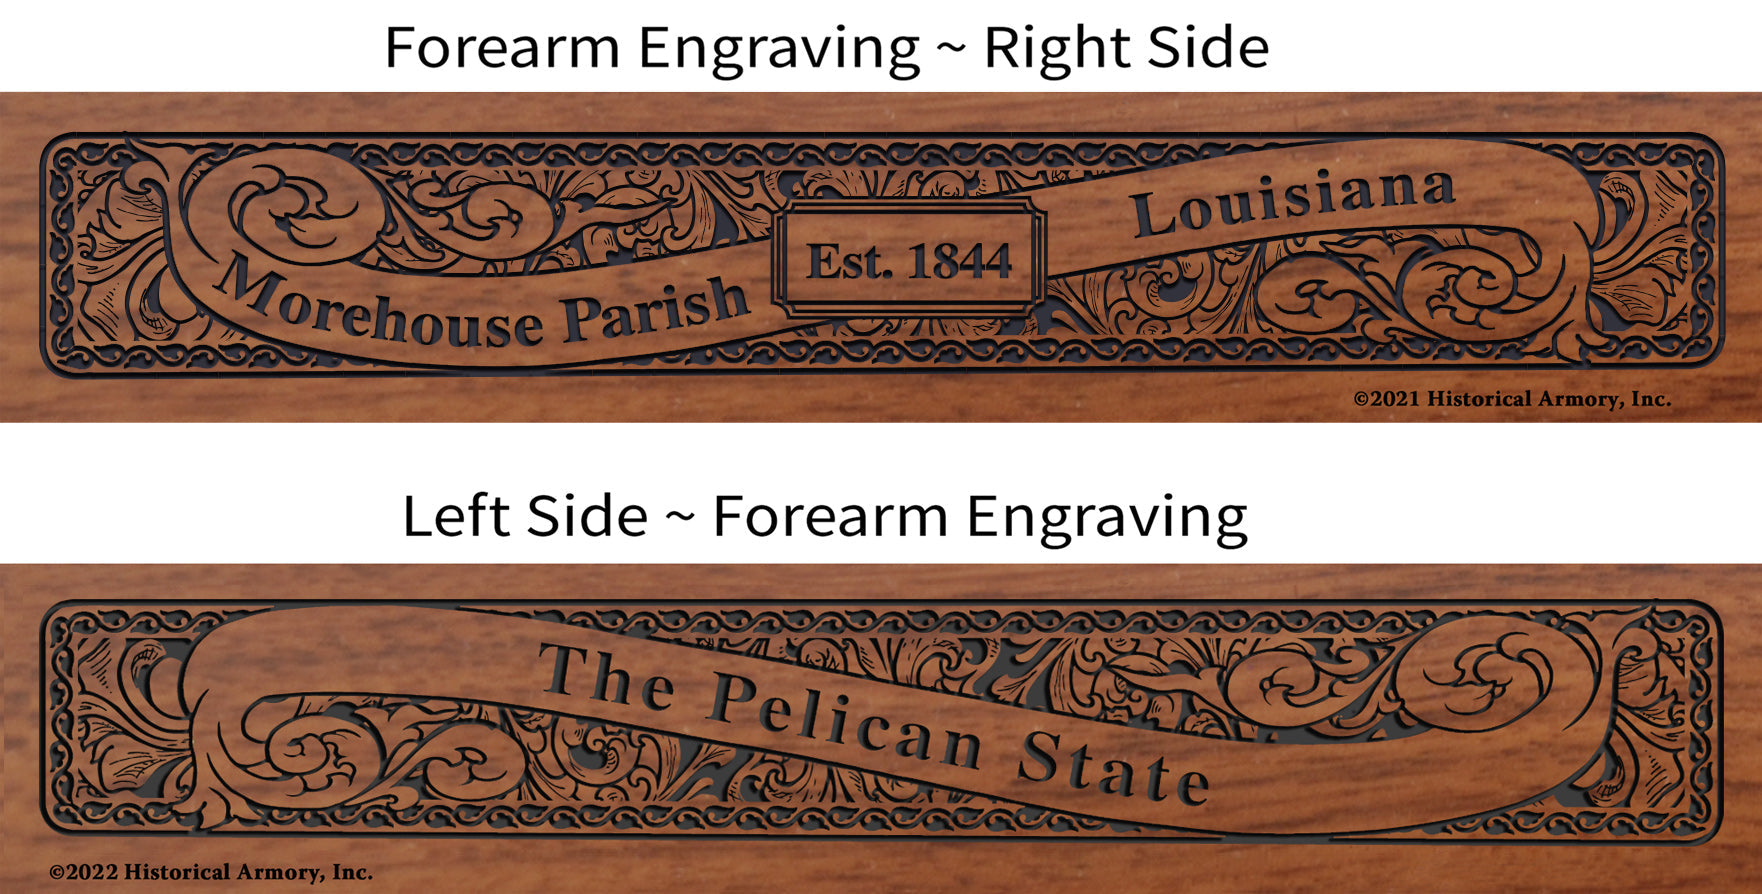 Morehouse Parish Louisiana Engraved Rifle Forearm Right-Side